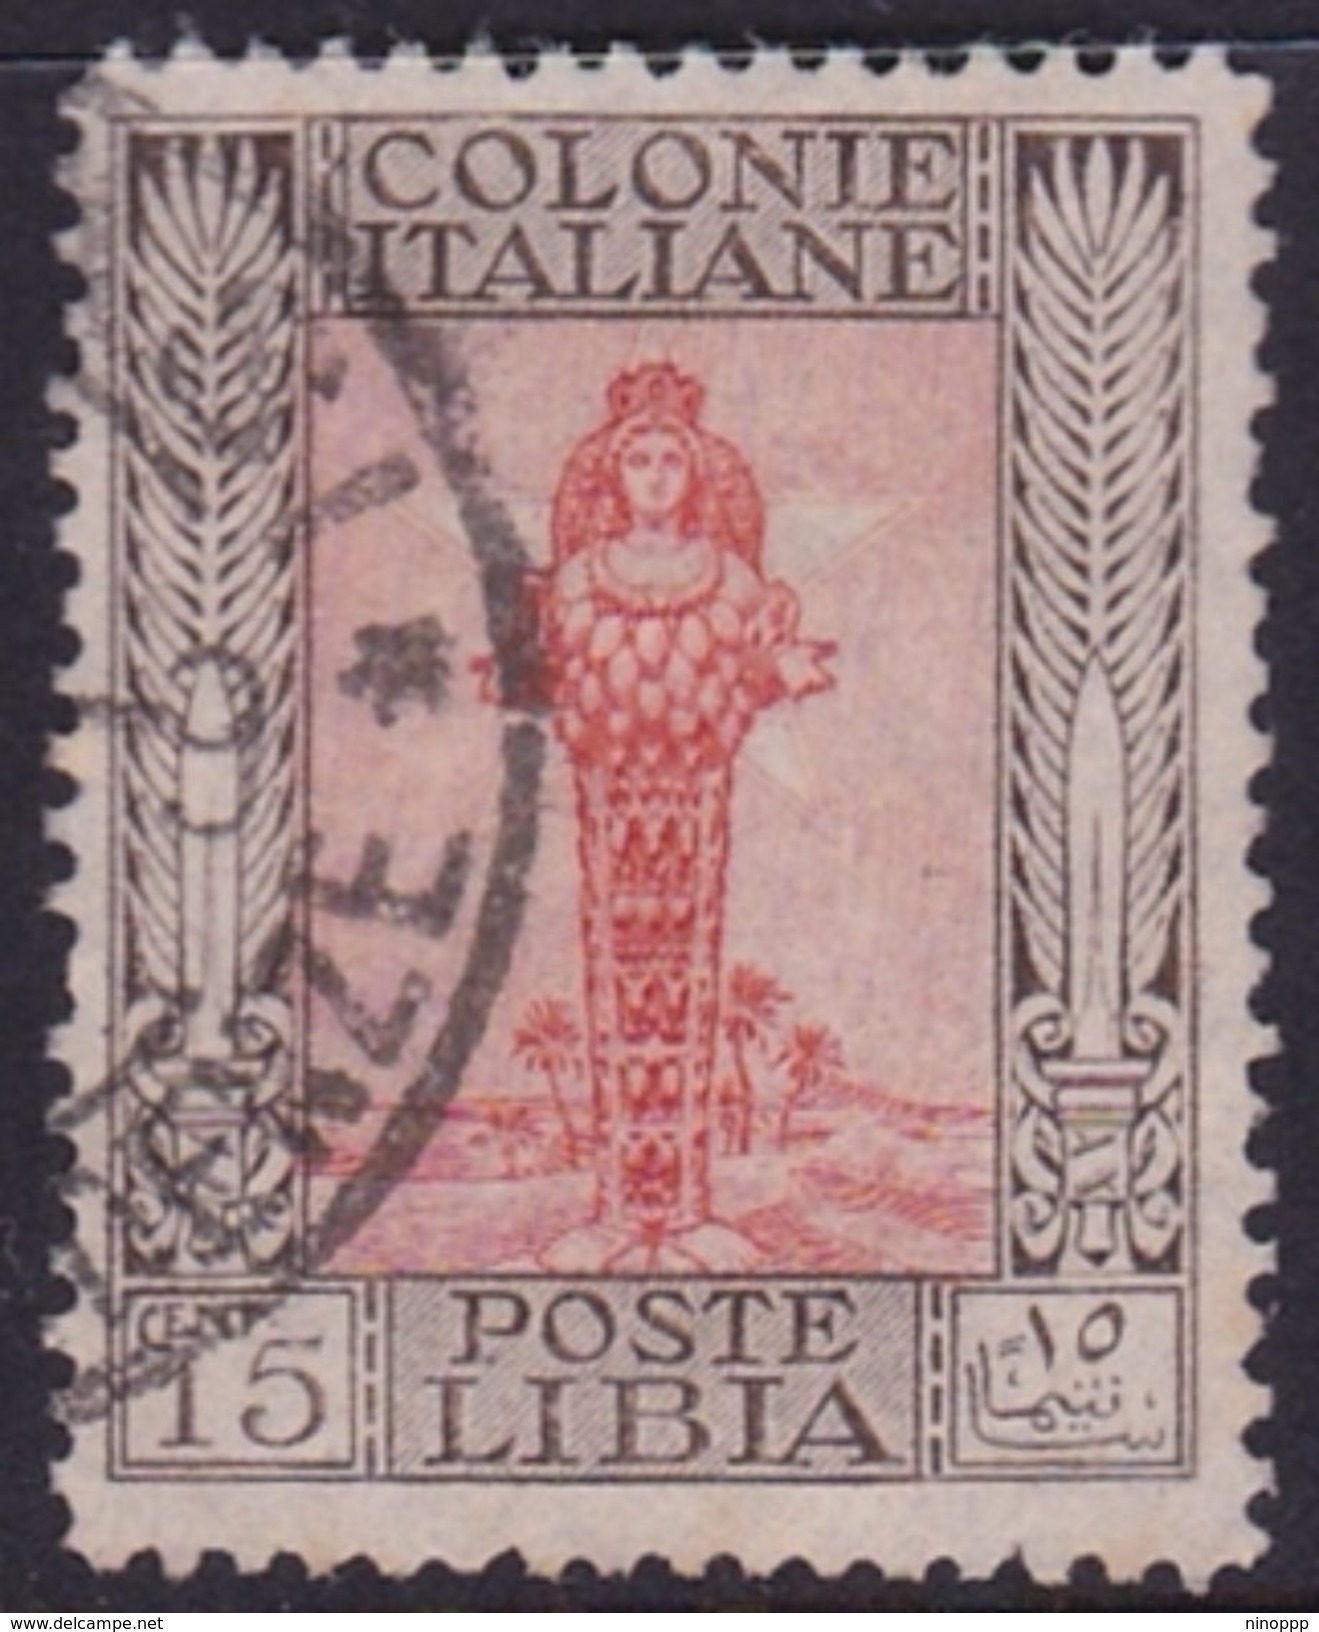 Italy-Colonies And Territories-Libya S 25 1921 ,Pictorials, 15c Diana Of Ephesus,used - Libya